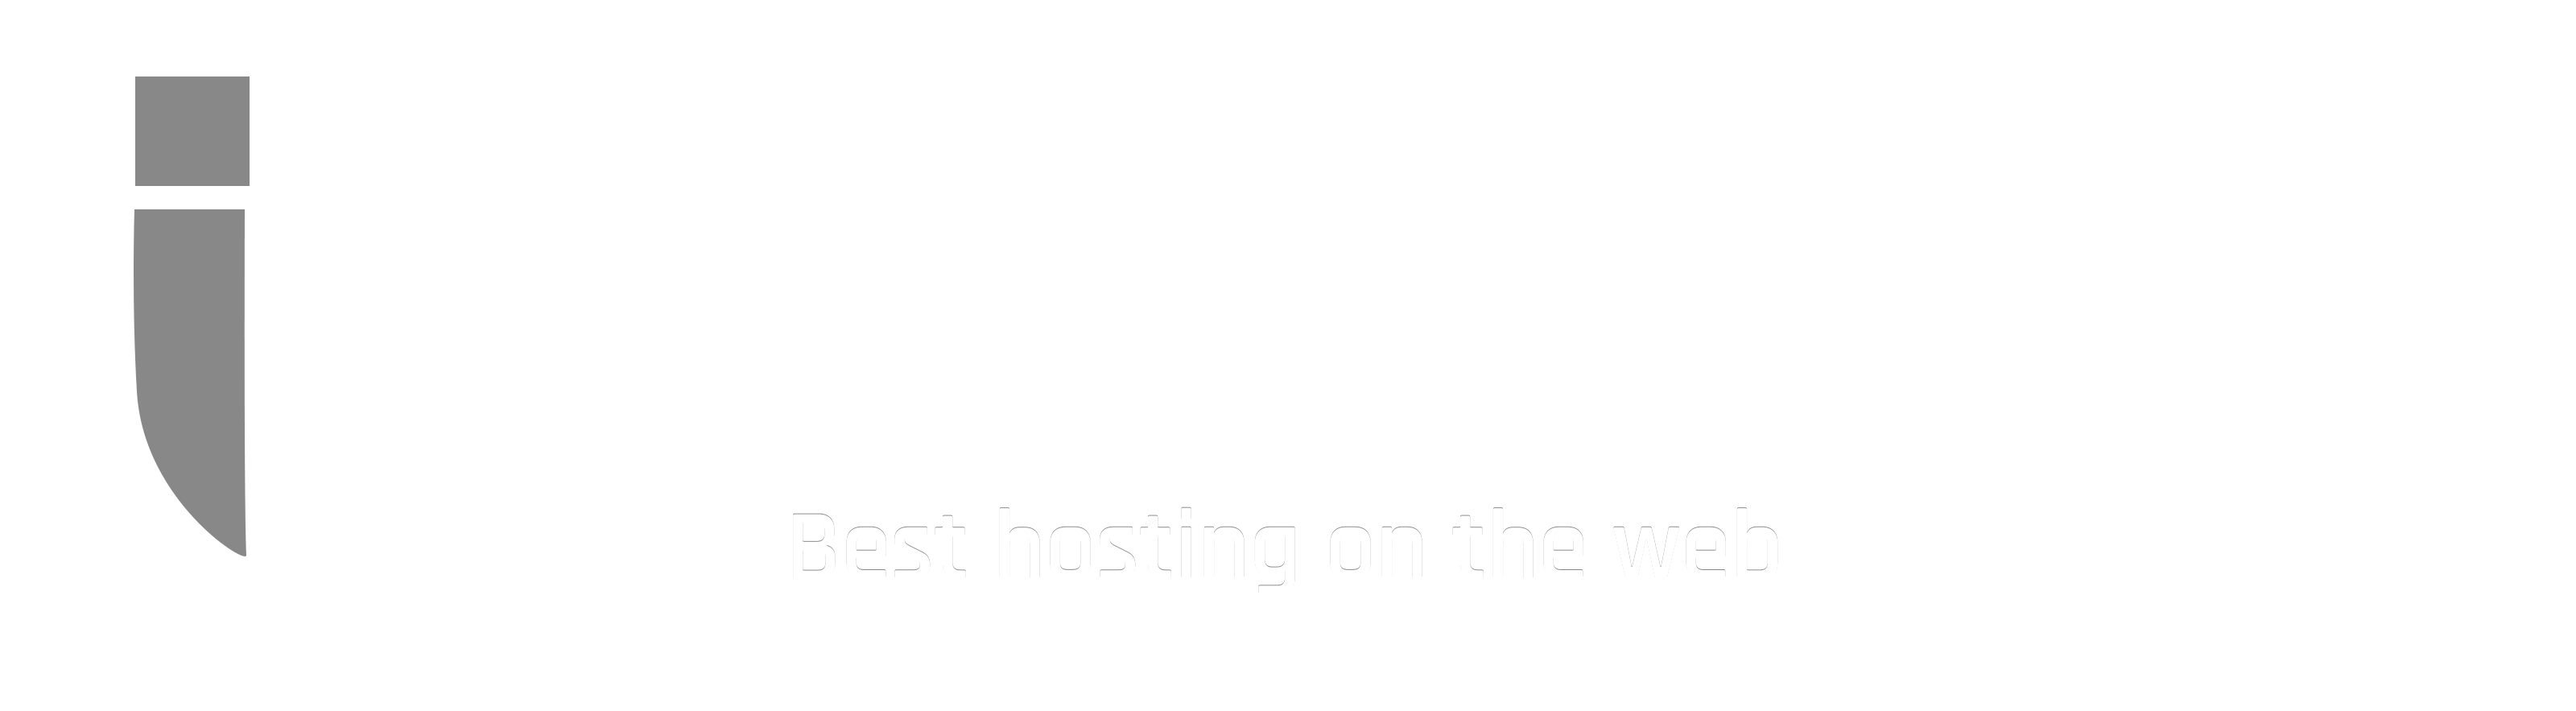 Tani Hosting Stron | Hosting WordPress i VPS | IQhost.pl - IQhost.pl Logo